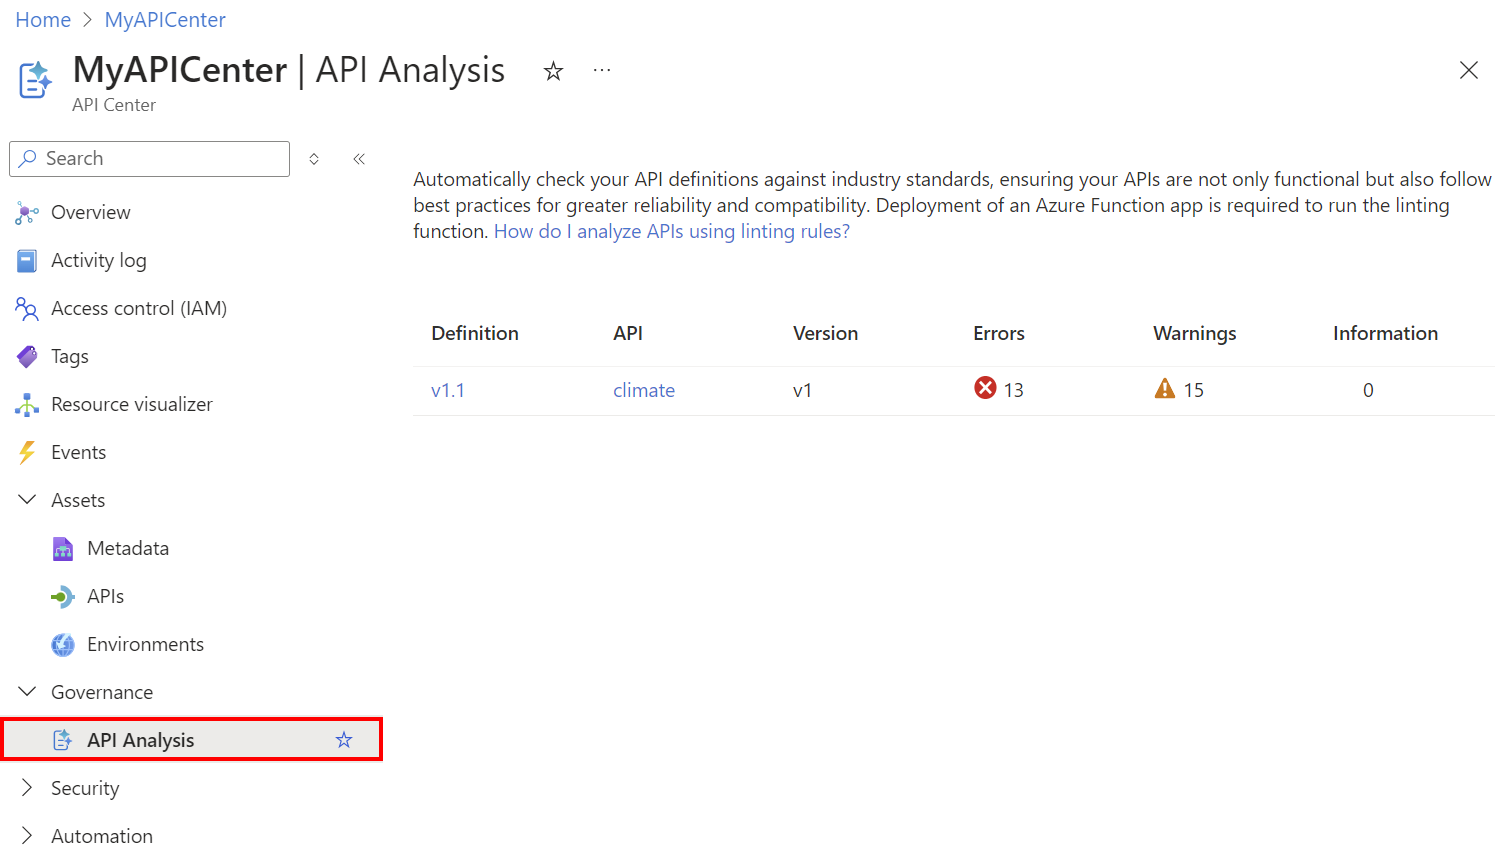 Screenshot of the API analysis summary in the portal.